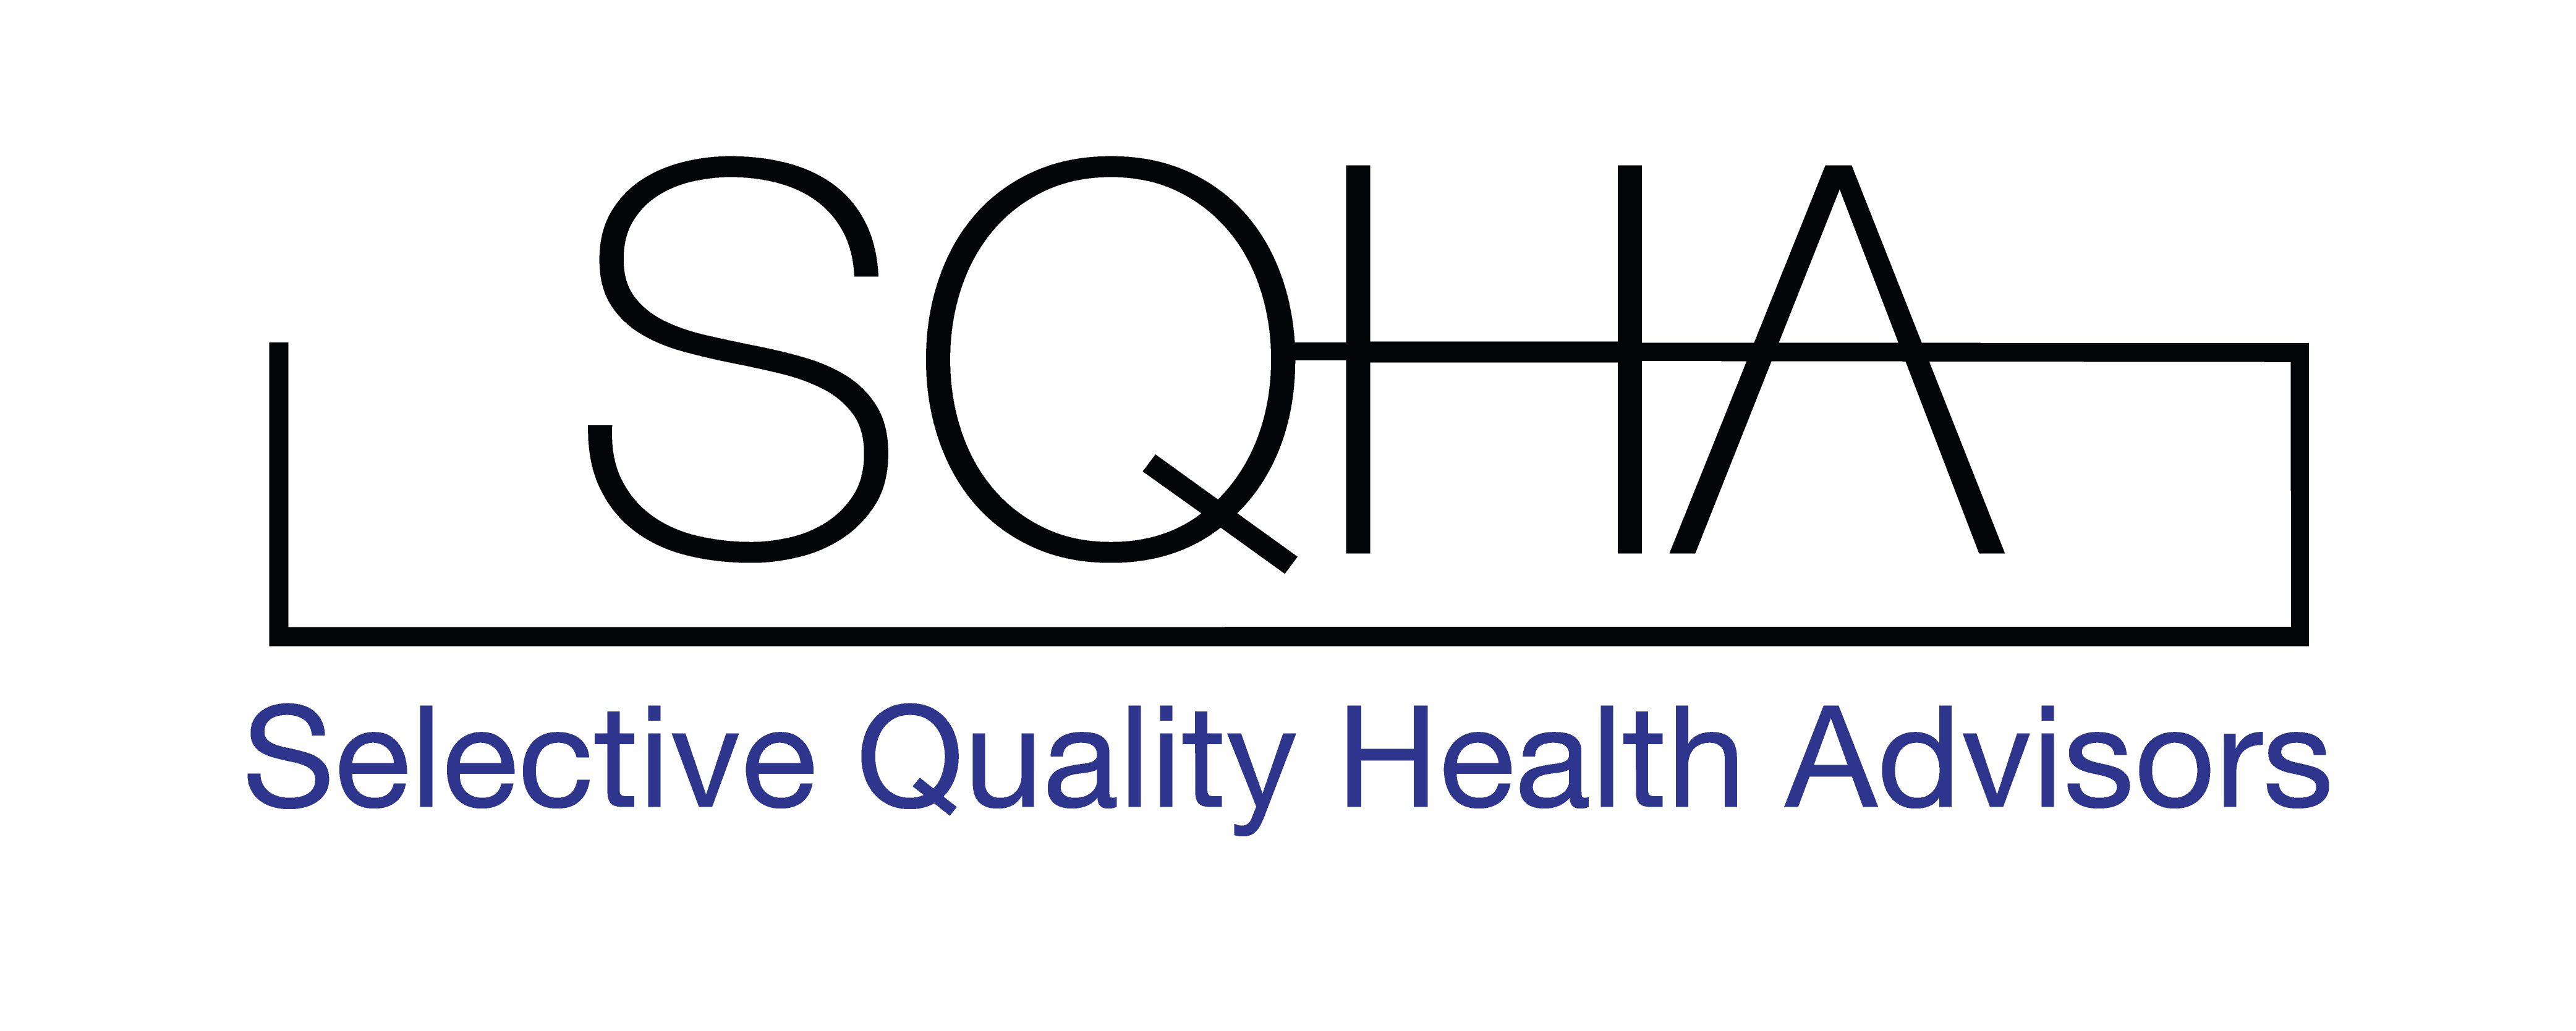 Selective Quality Health Advisors White